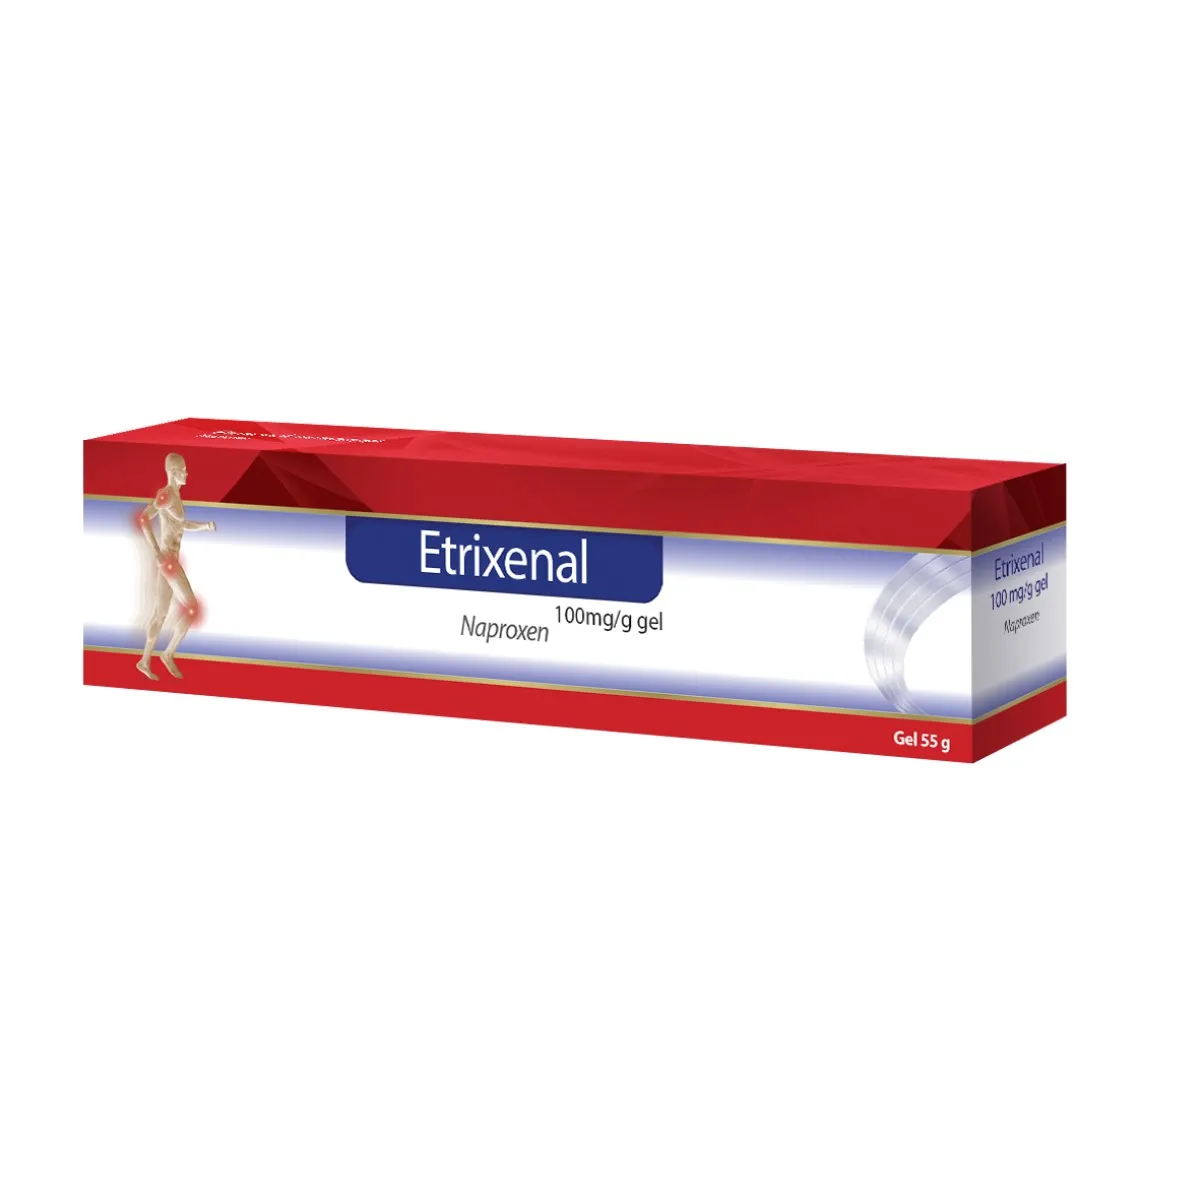 Gel Etrixenal 100mg/g, 55g, Walmark